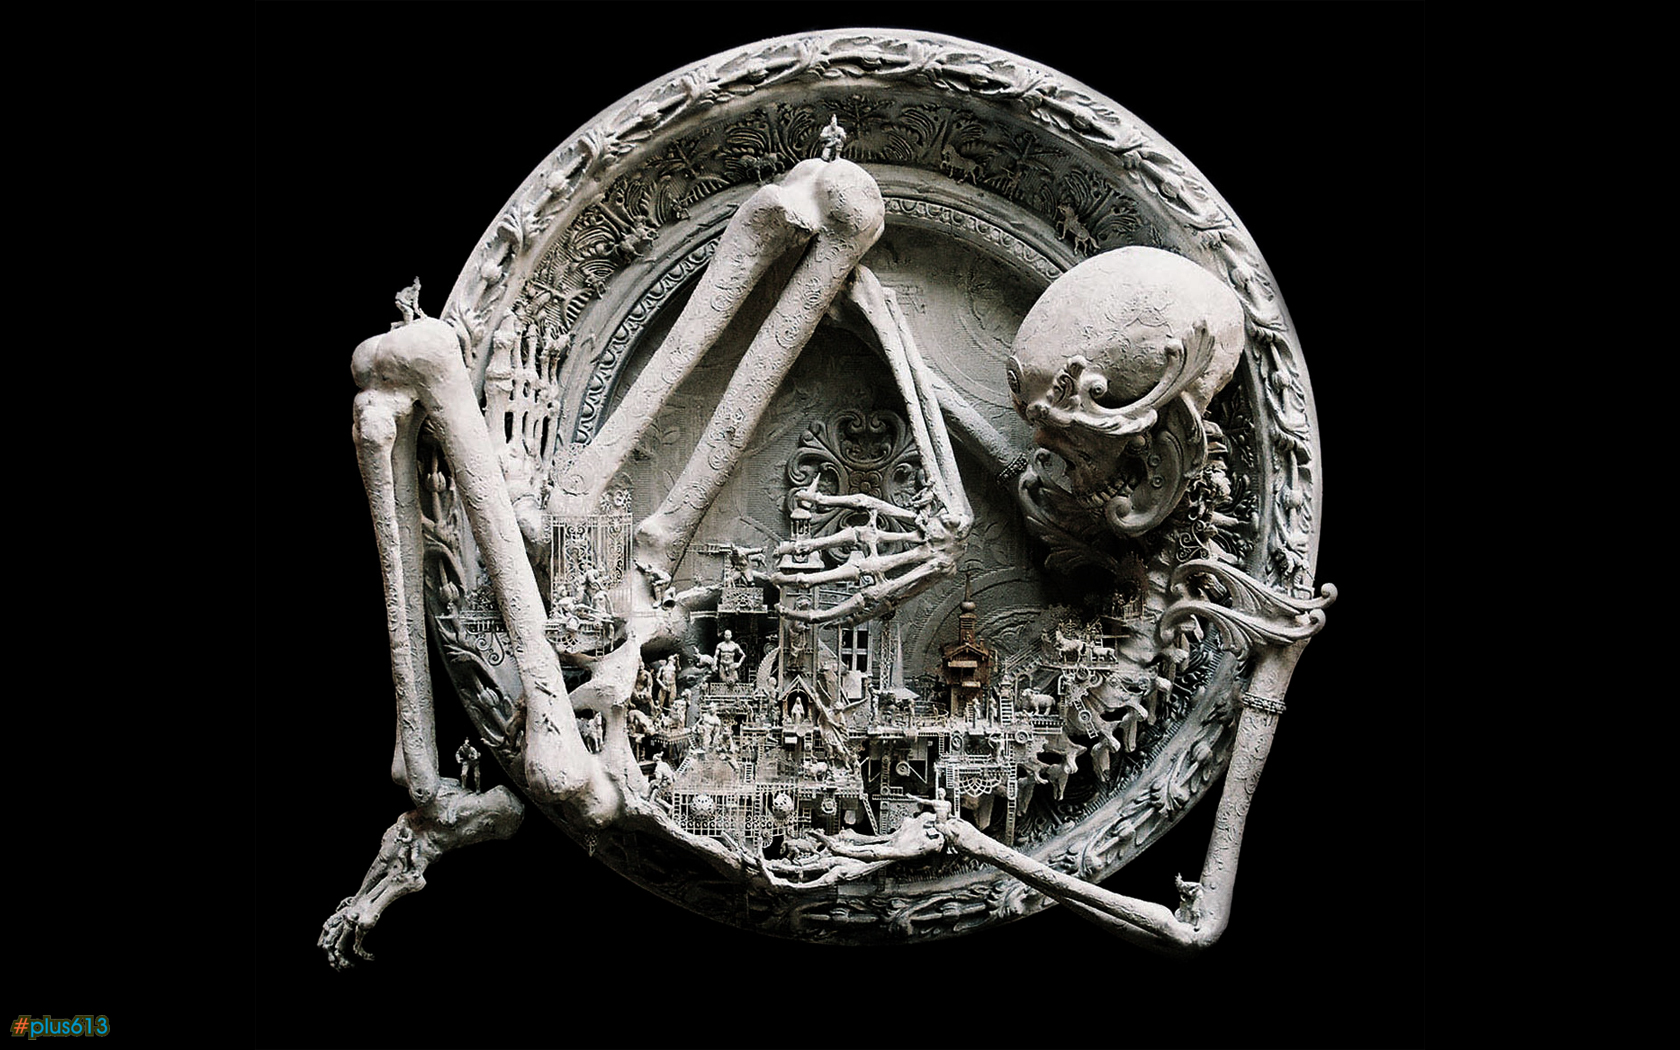 Plus613 Culture In The Blender Skeleton Art